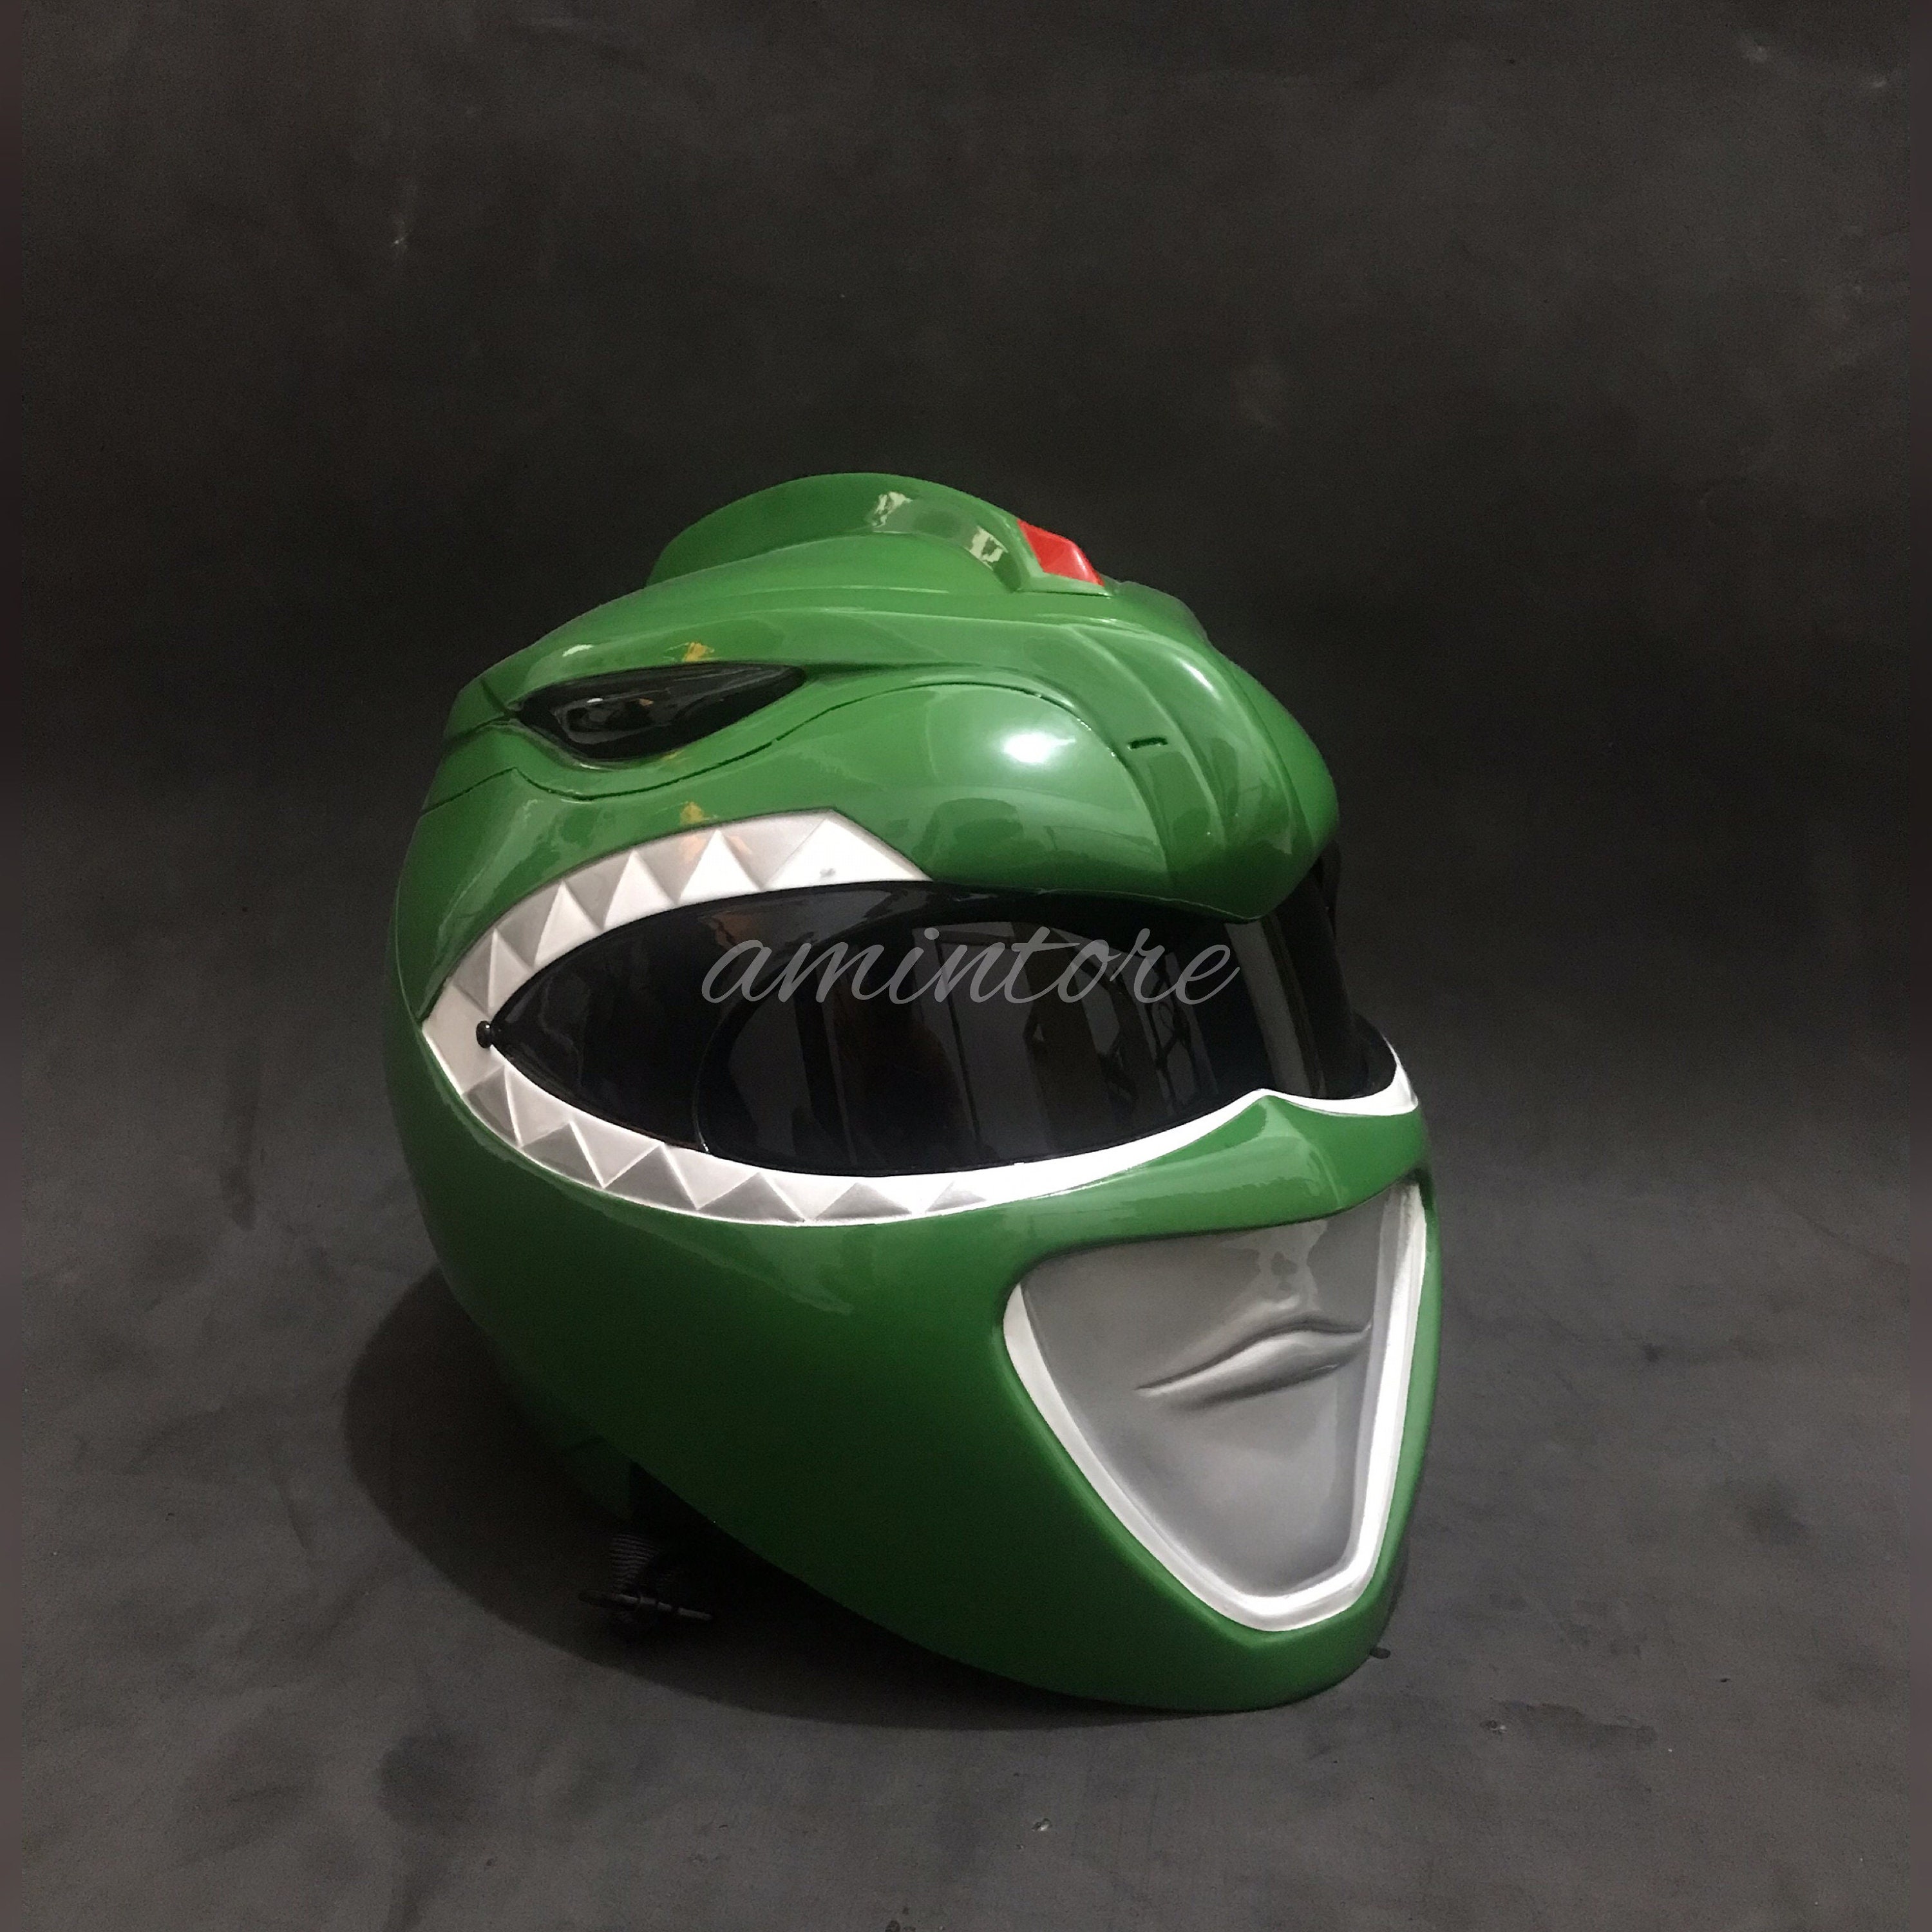 Posada Cava Comienzo Power rangers motorcycle helmet - Etsy España